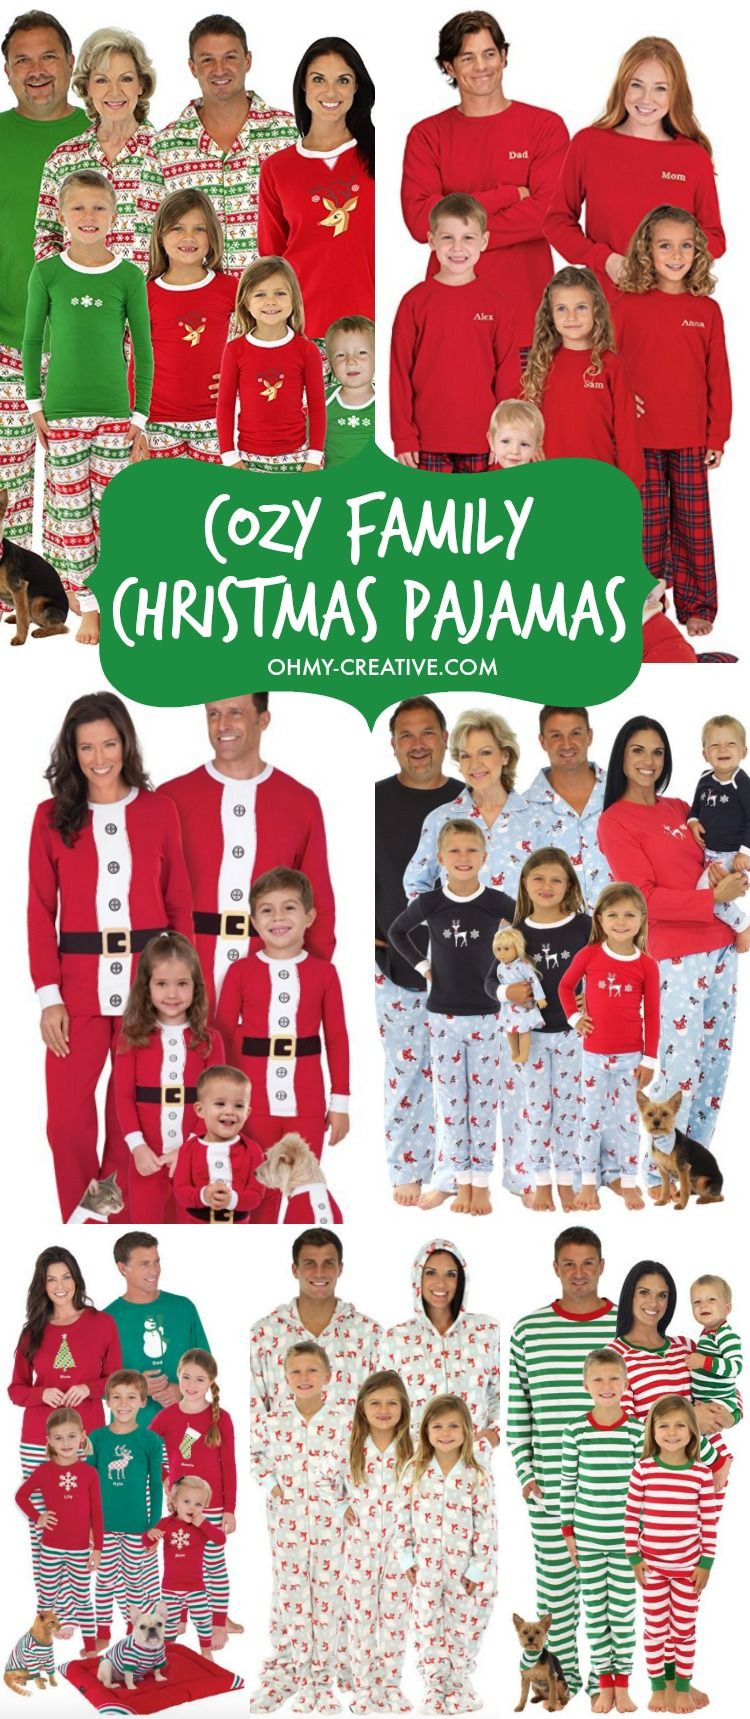 Christmas Eve Party Ideas For Family
 11 COZY FAMILY CHRISTMAS PAJAMAS FOR 2019